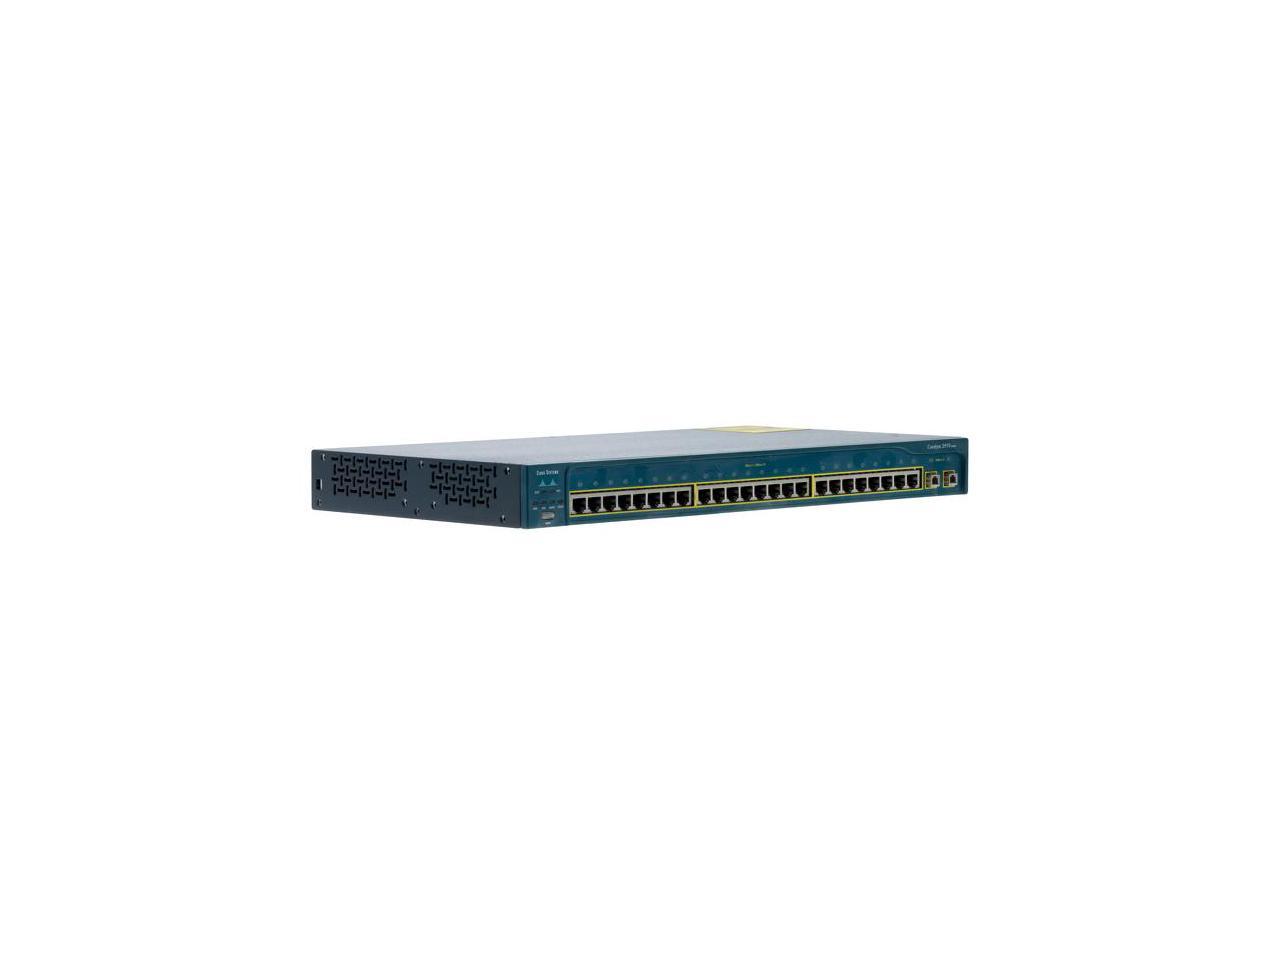 Cisco Catalyst 2950 Series 24 Port Switch, WS-C2950C-24